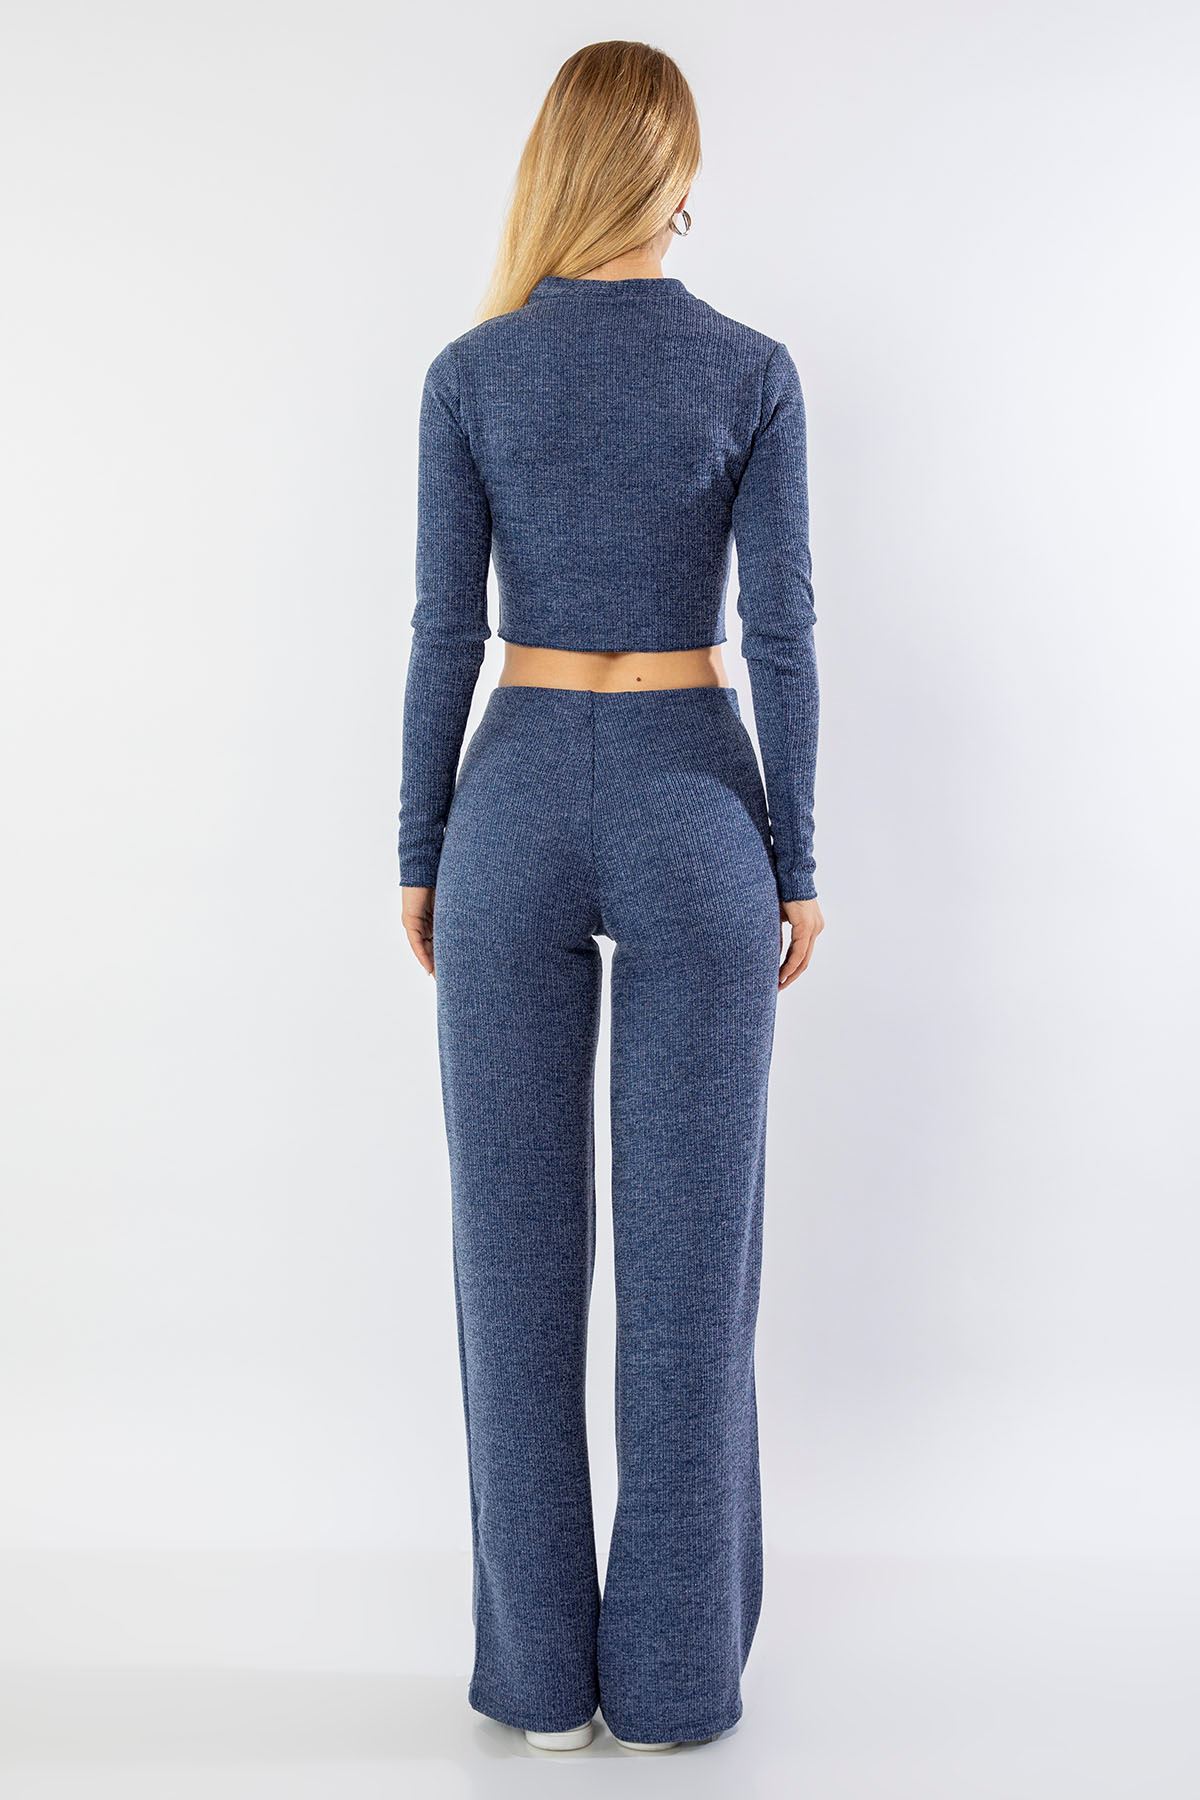 Knitwear Fabric Comfy Fit Elastic Waist Wide Leg Women'S Trouser - Navy Blue 